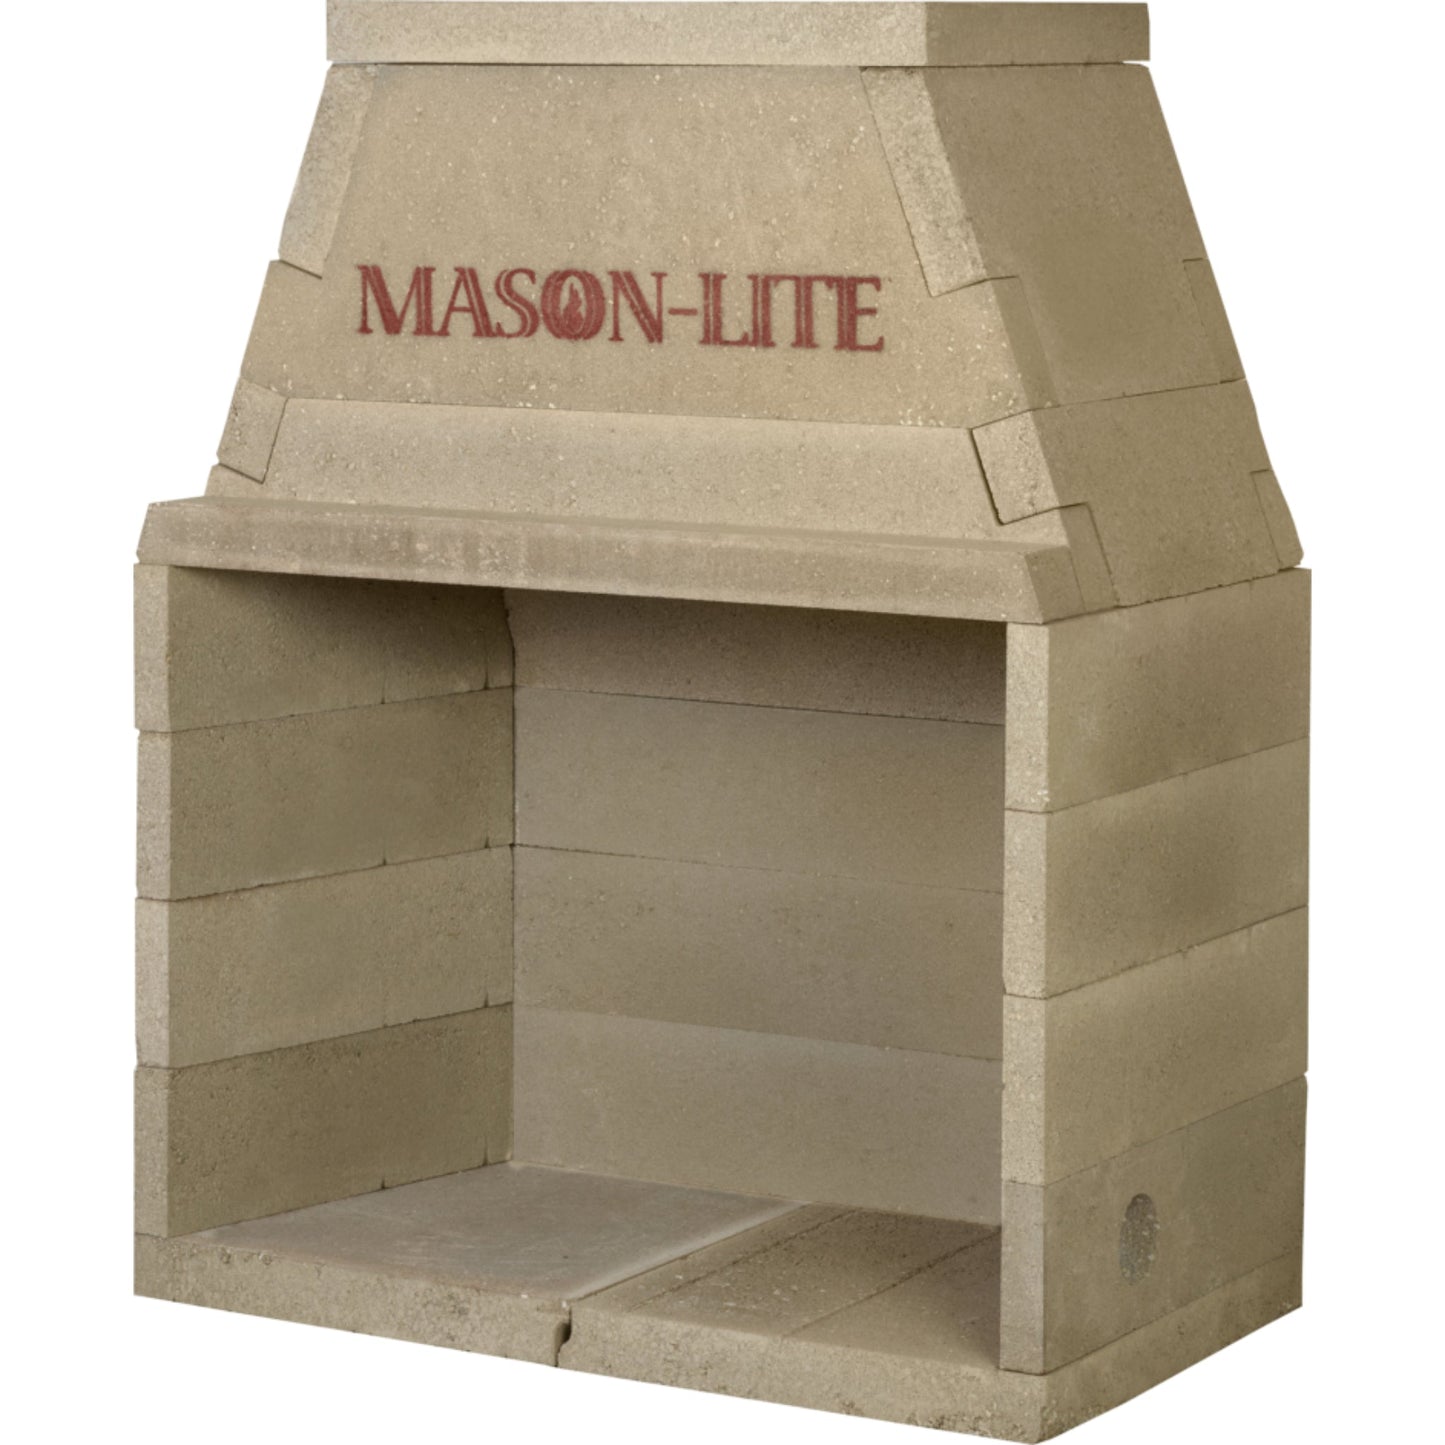 Mason-Lite 49" Pre-Cast Masonry Firebox Kit